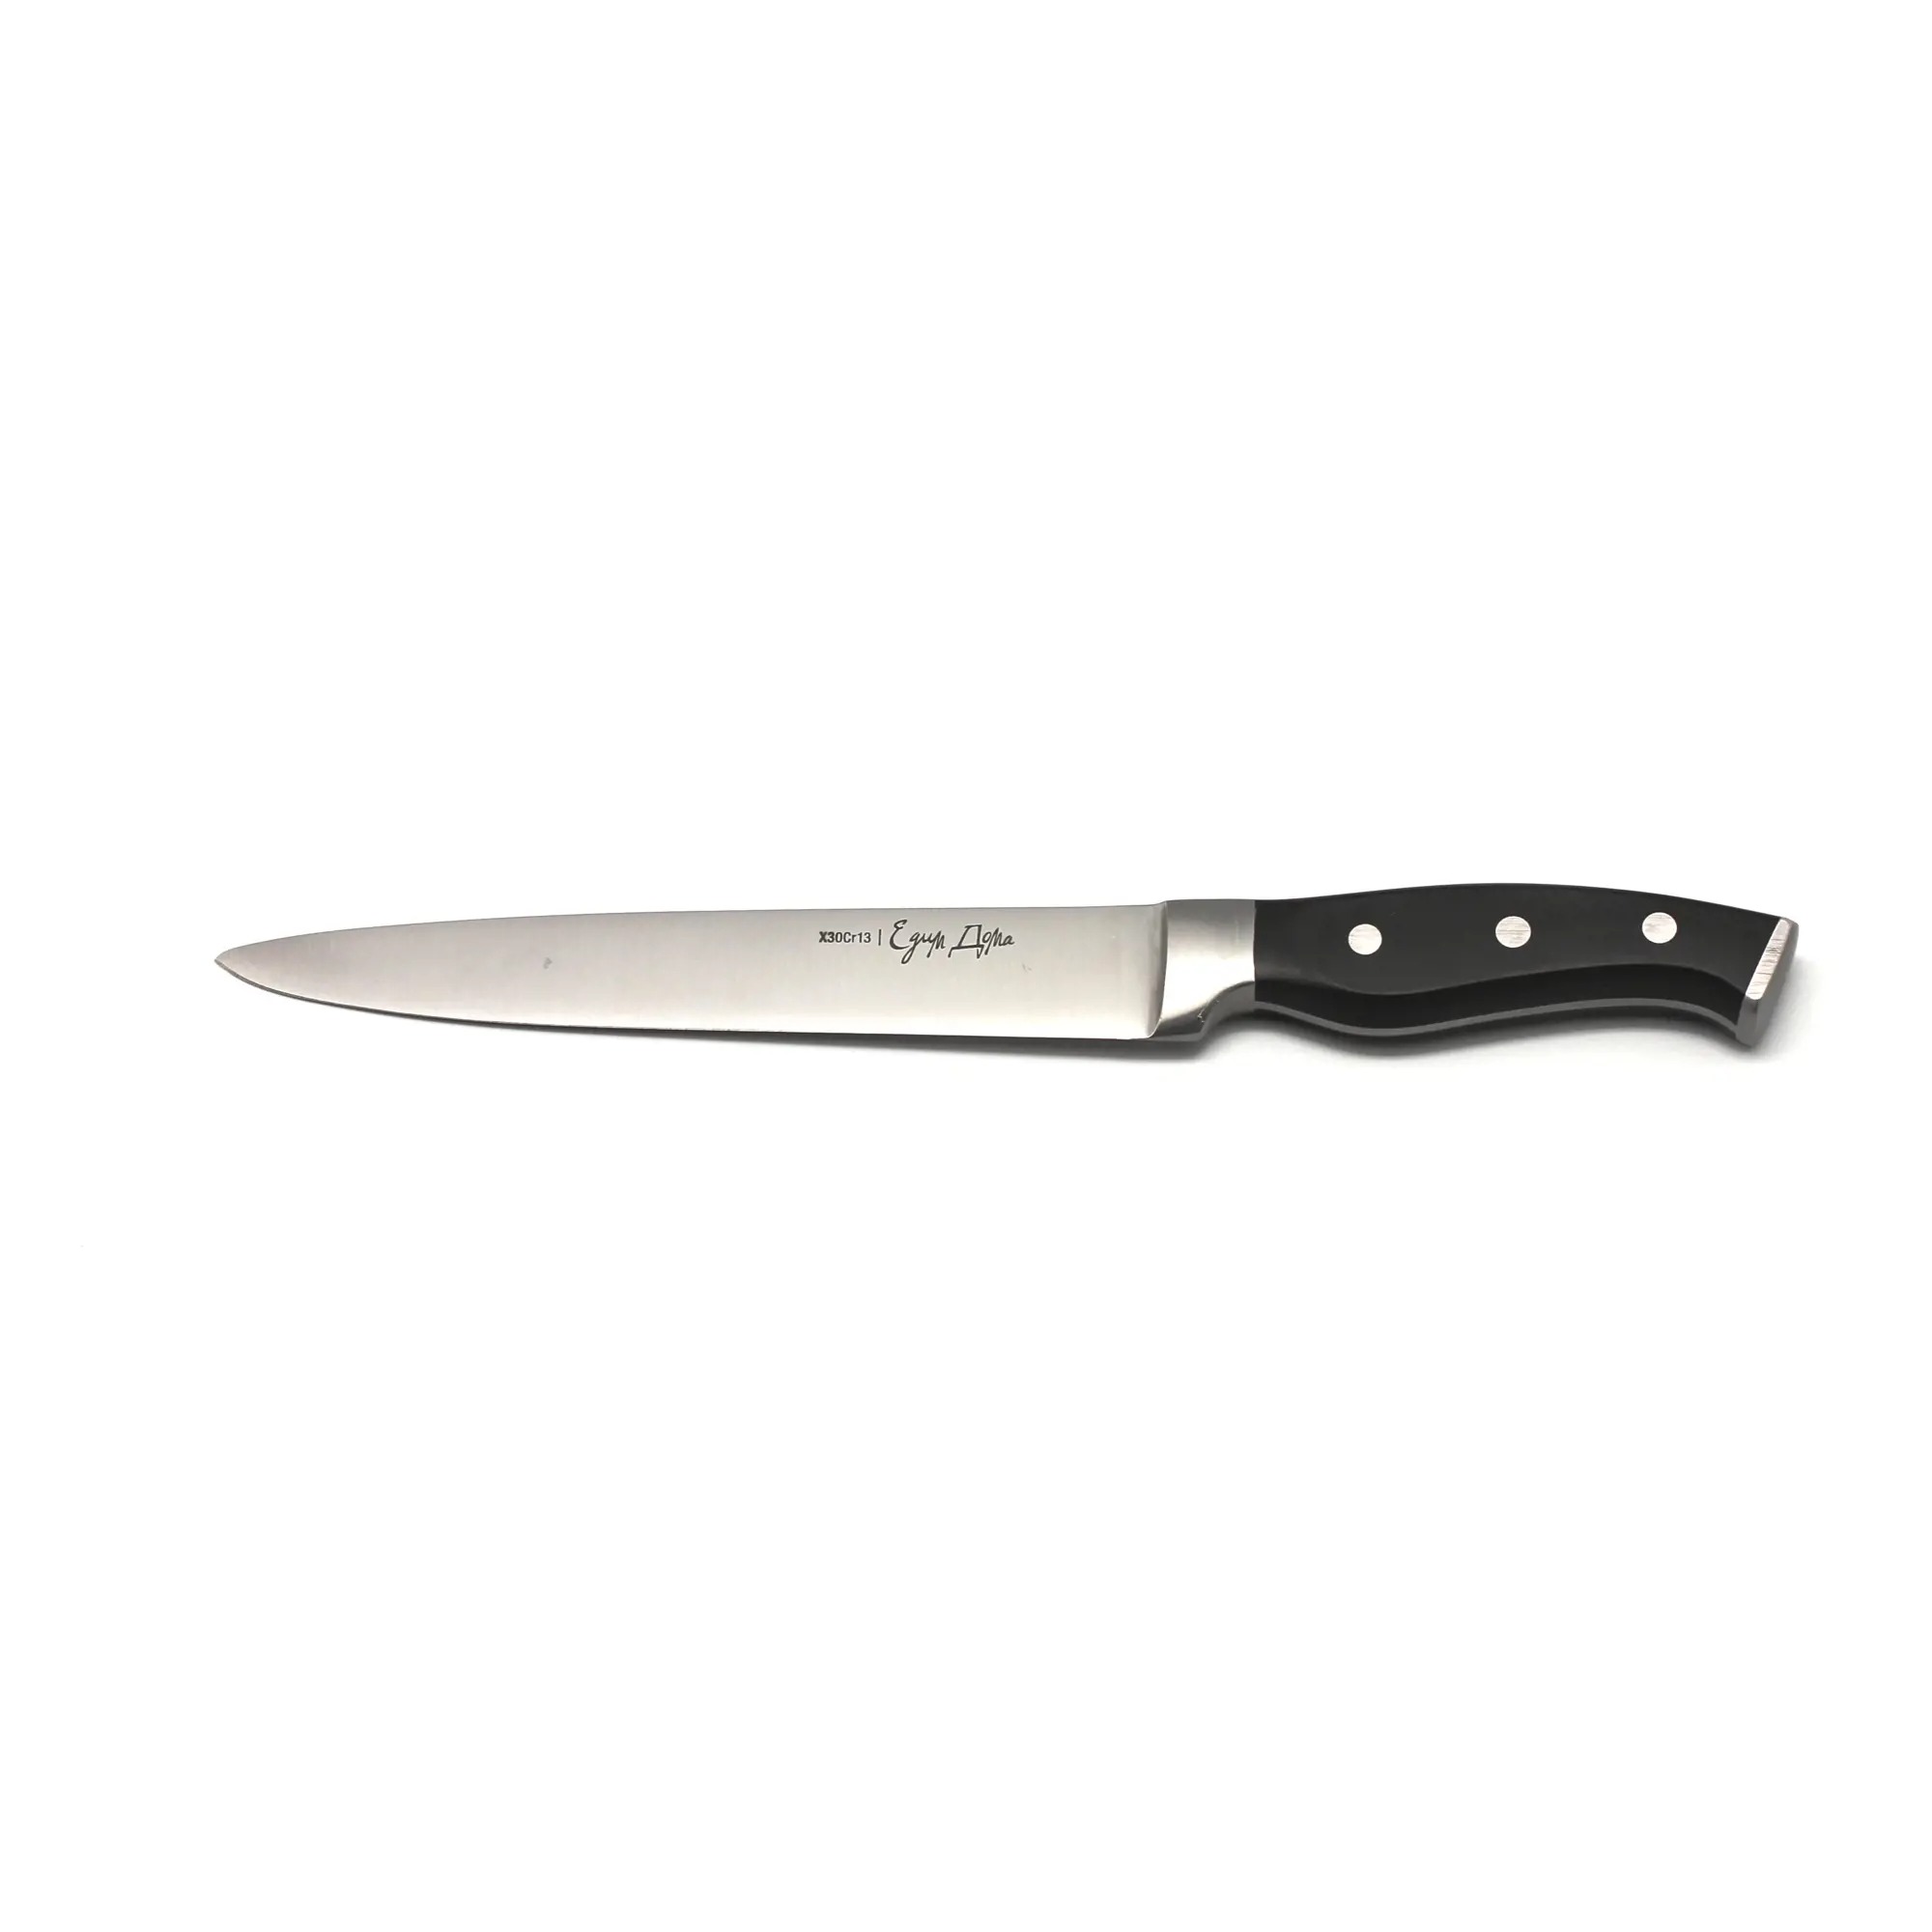 нож для нарезки едим дома 20см листовой ed 404 Нож для нарезки Едим дома 20см кованый (ED-104)